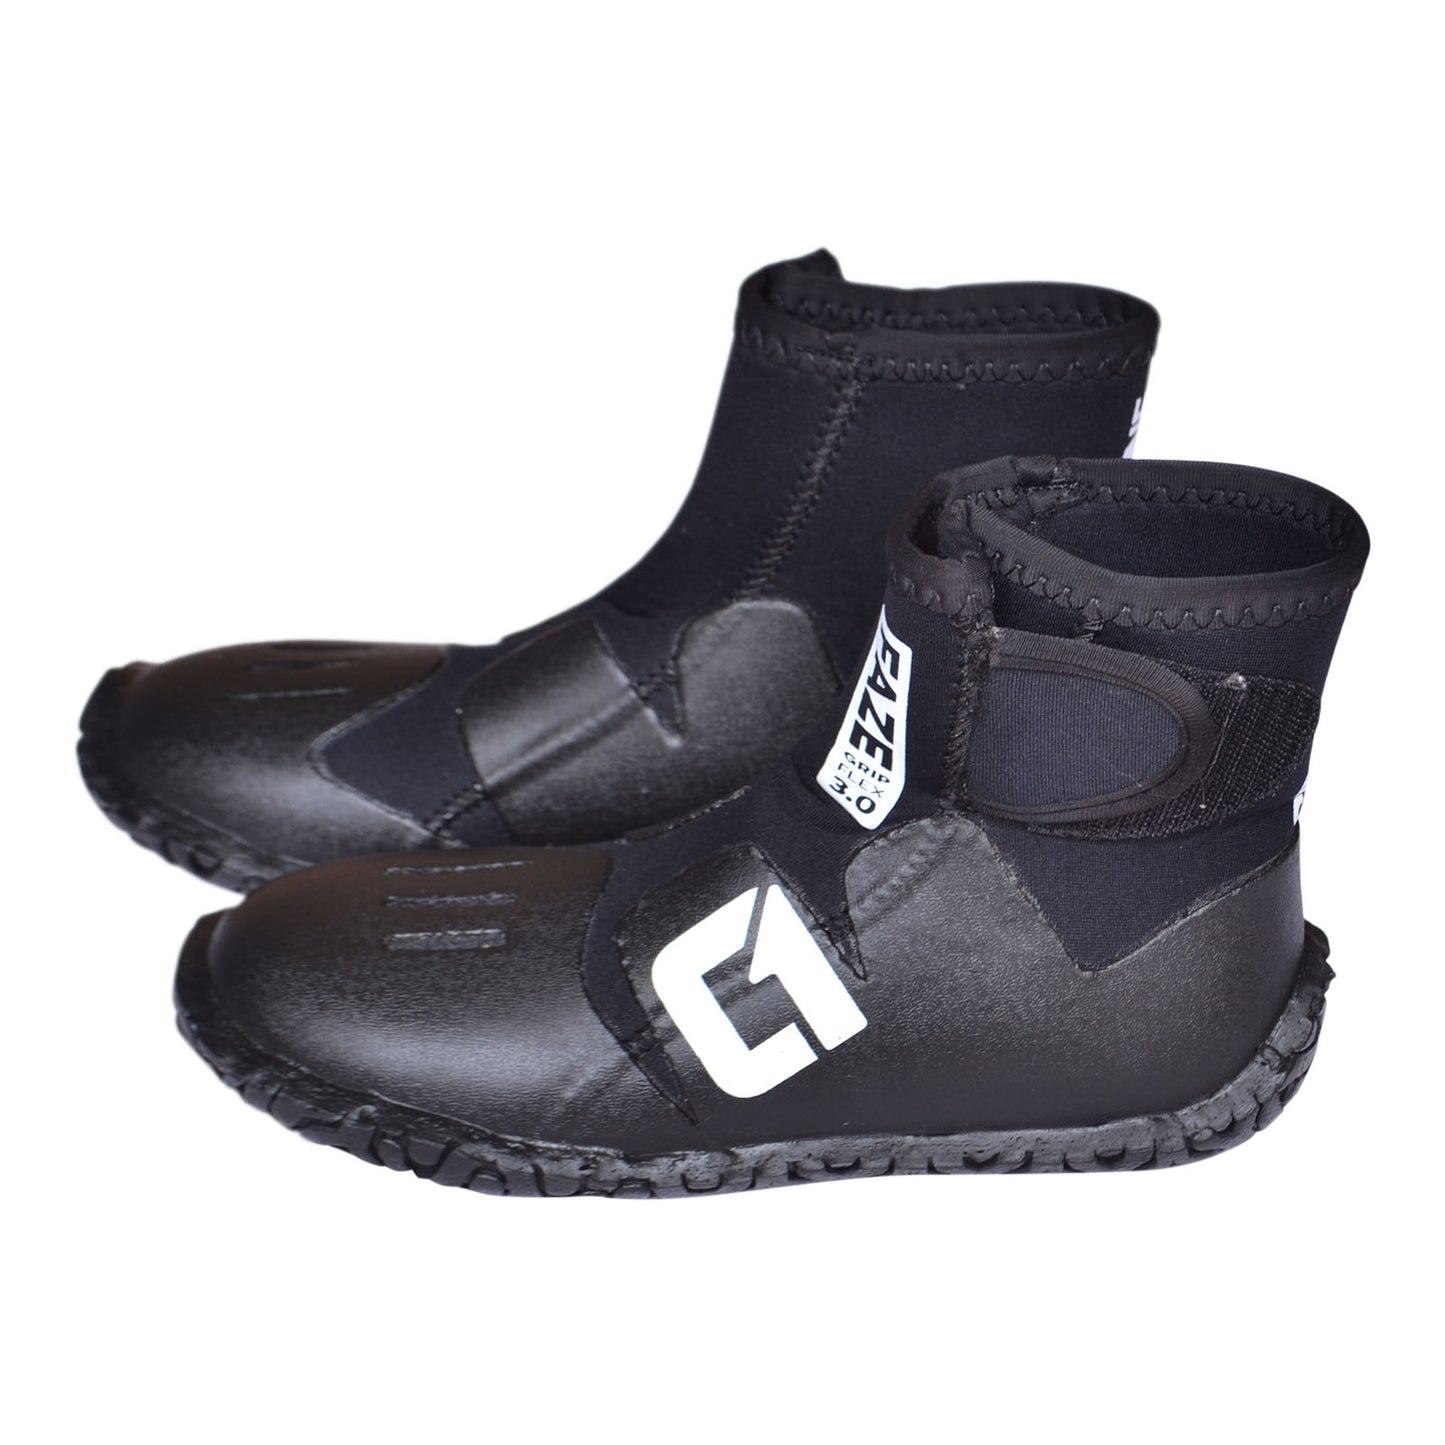 Wetsuit Boot – 3mm FAZE Adult Wetsuit Boot